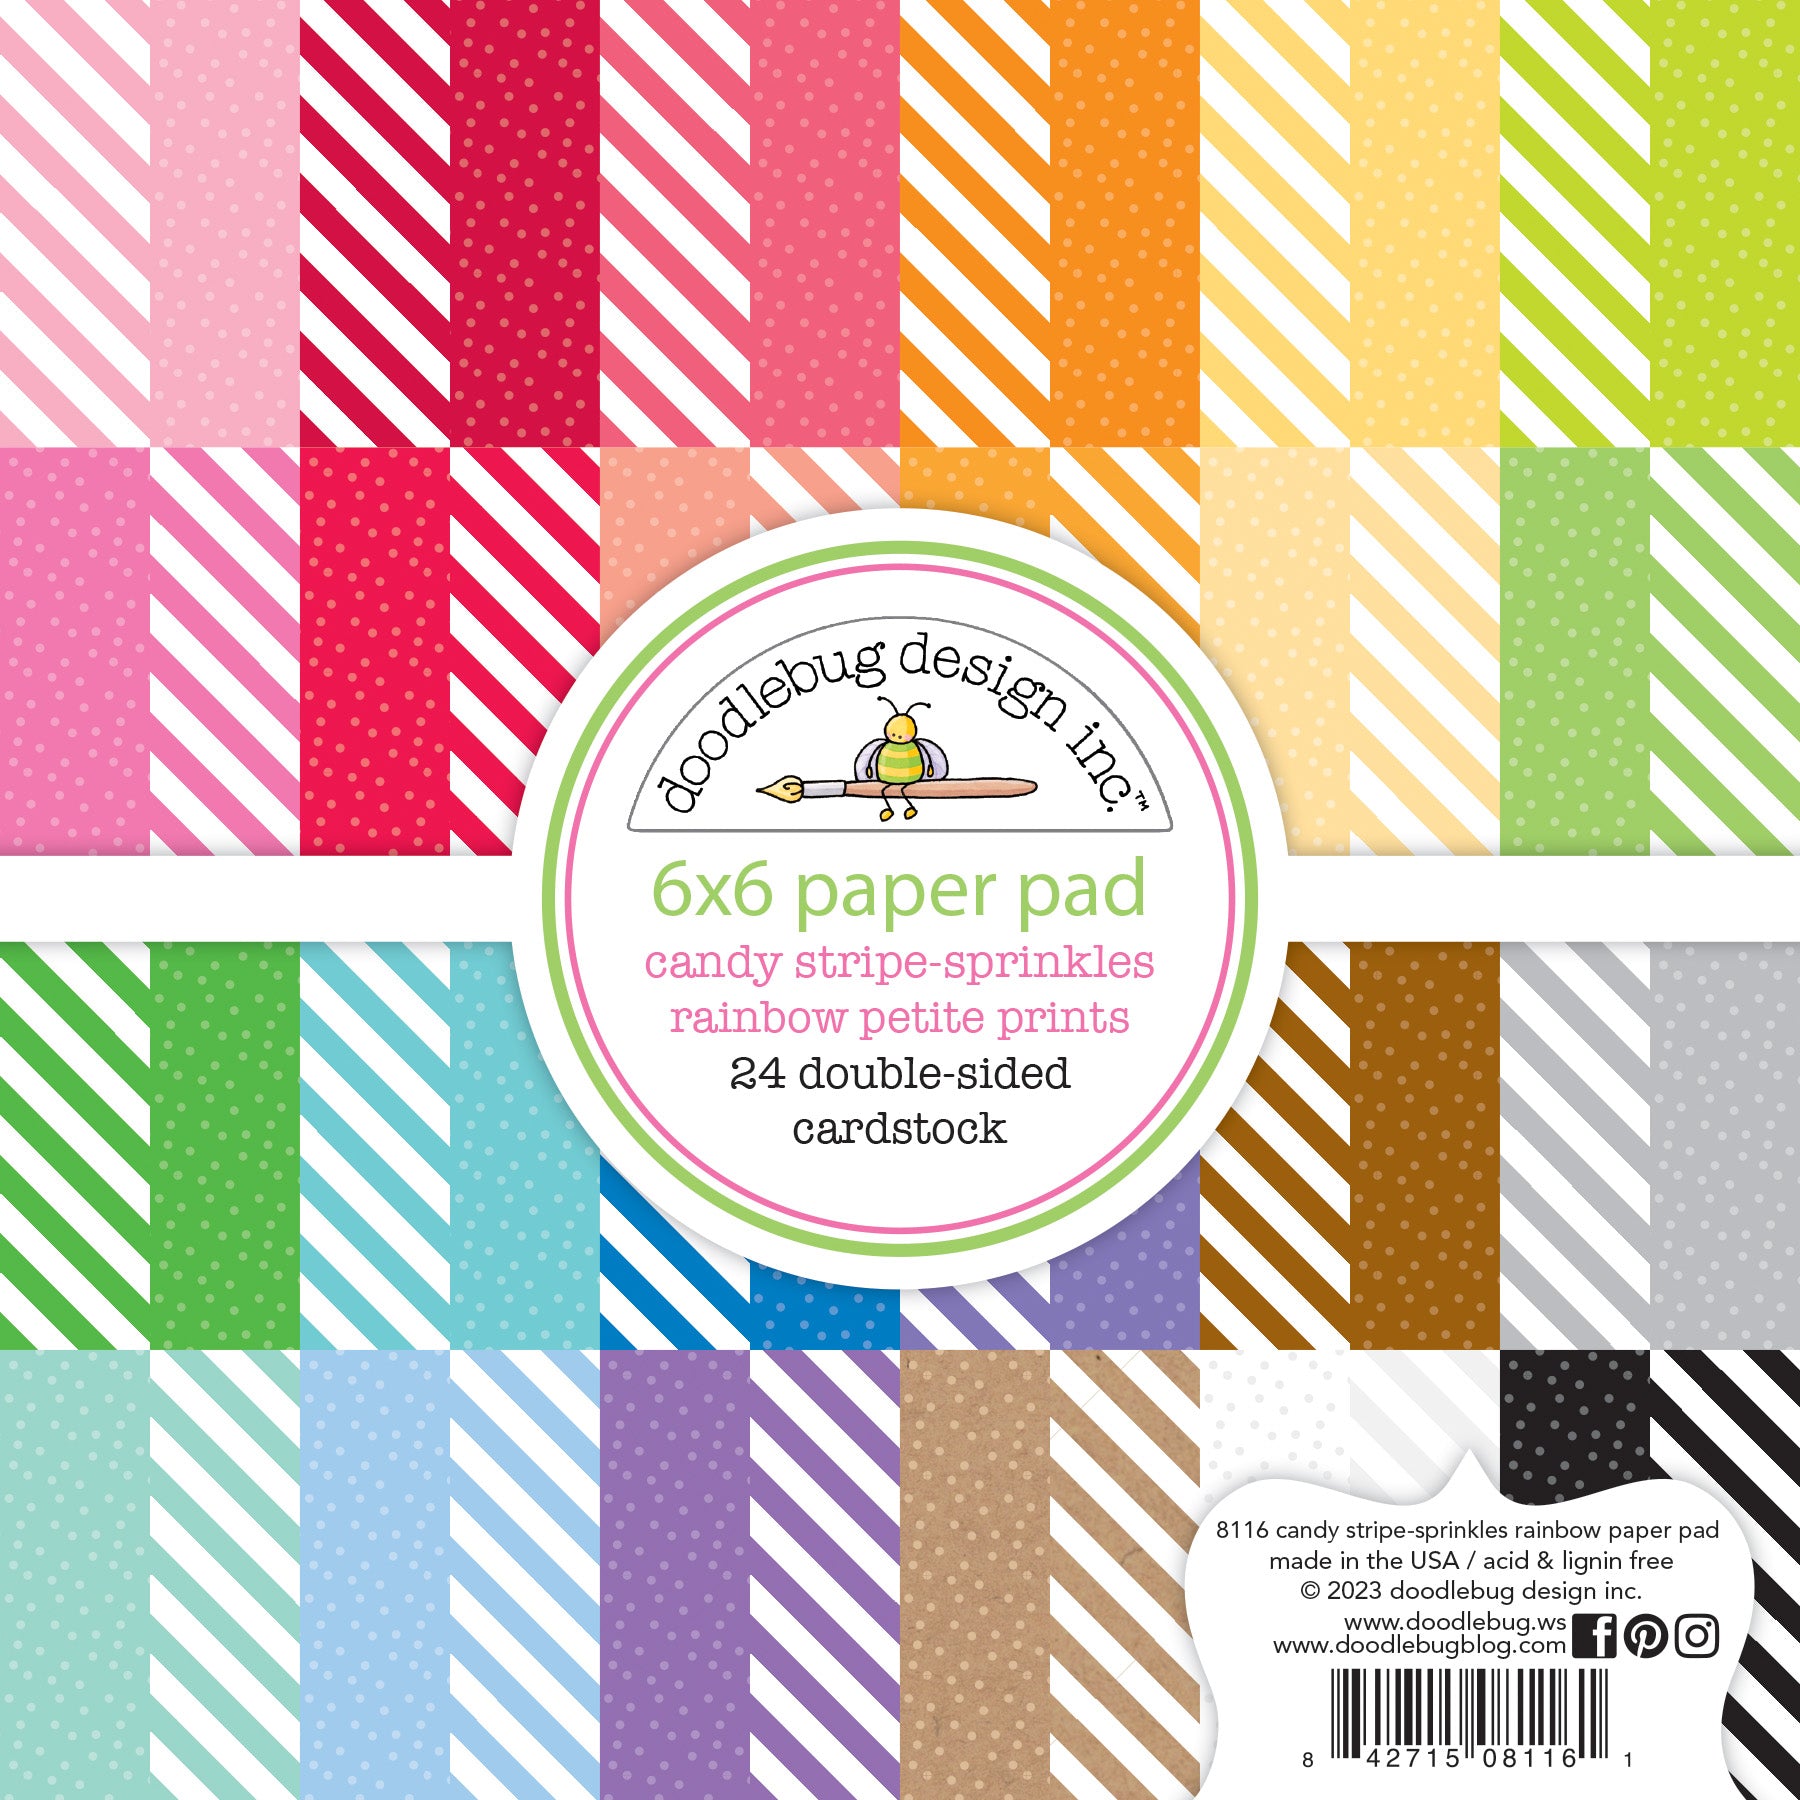 Candy Stripe-Sprinkles Rainbow Petite 6x6 Paper Pad